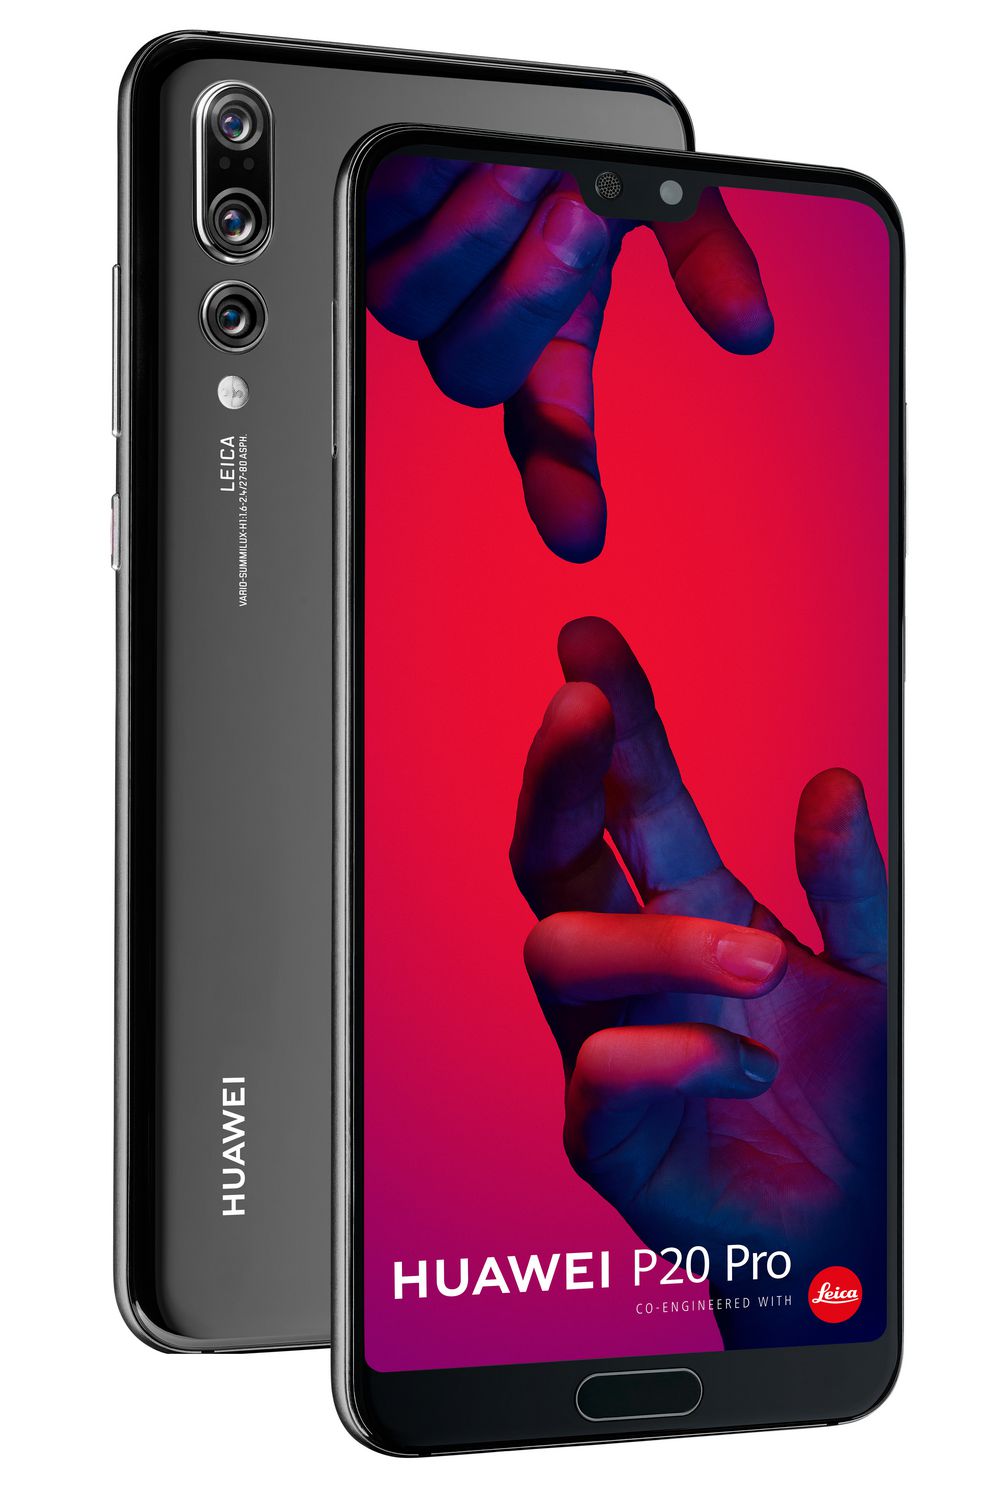 ما الذي اختلف في هاتف Huawei P30 Pro عن هاتف Huawei P20 Pro